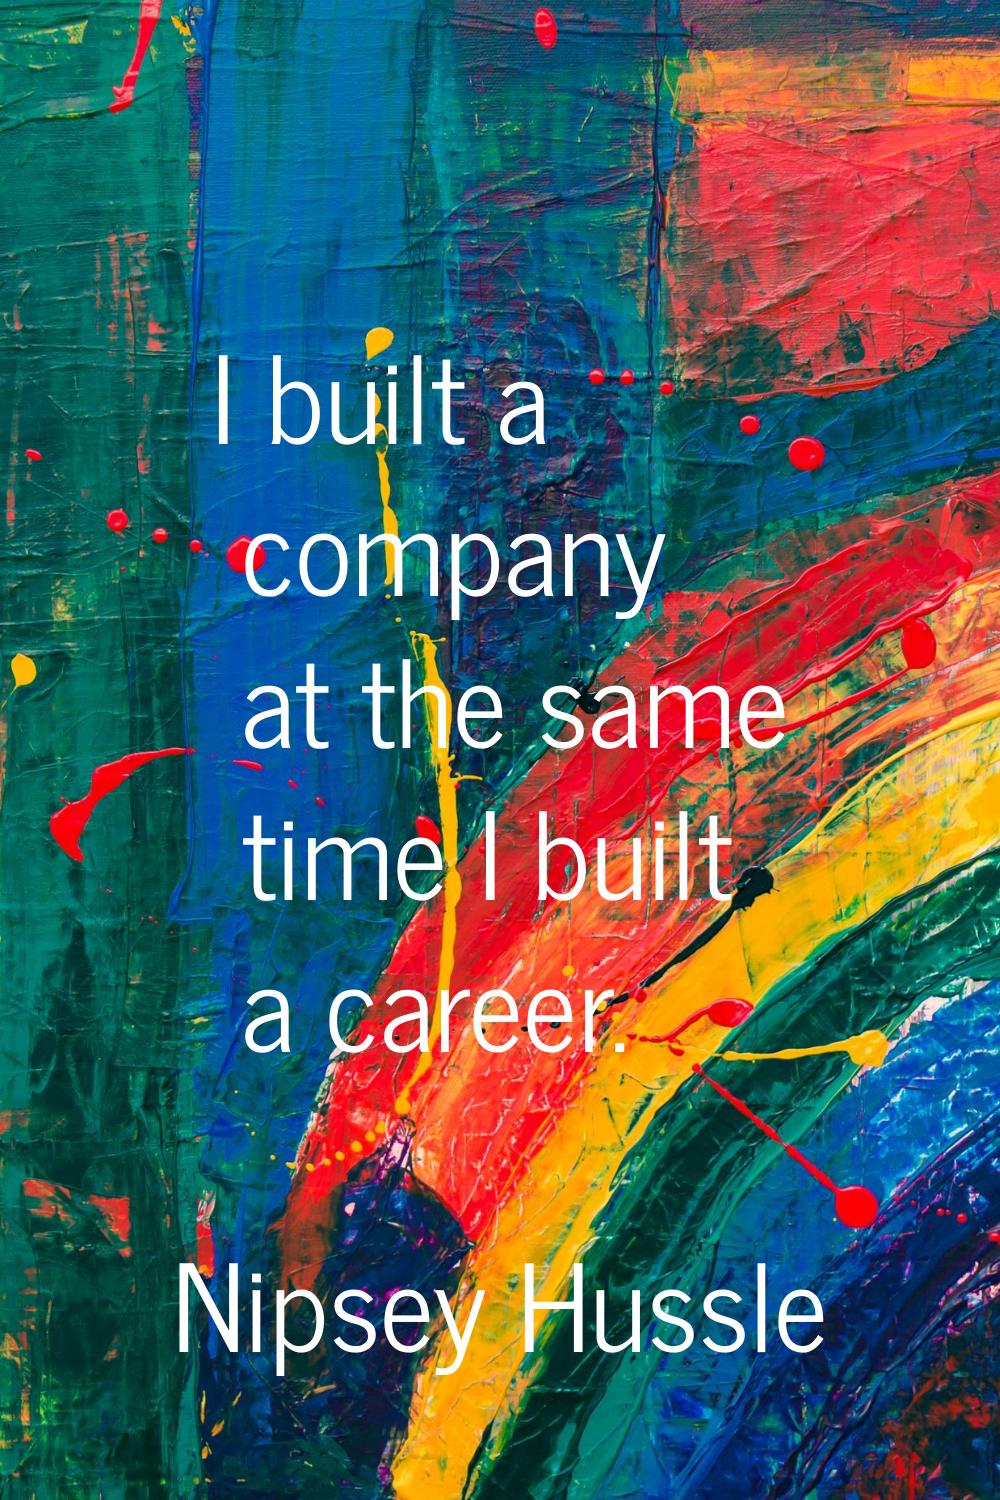 I built a company at the same time I built a career.